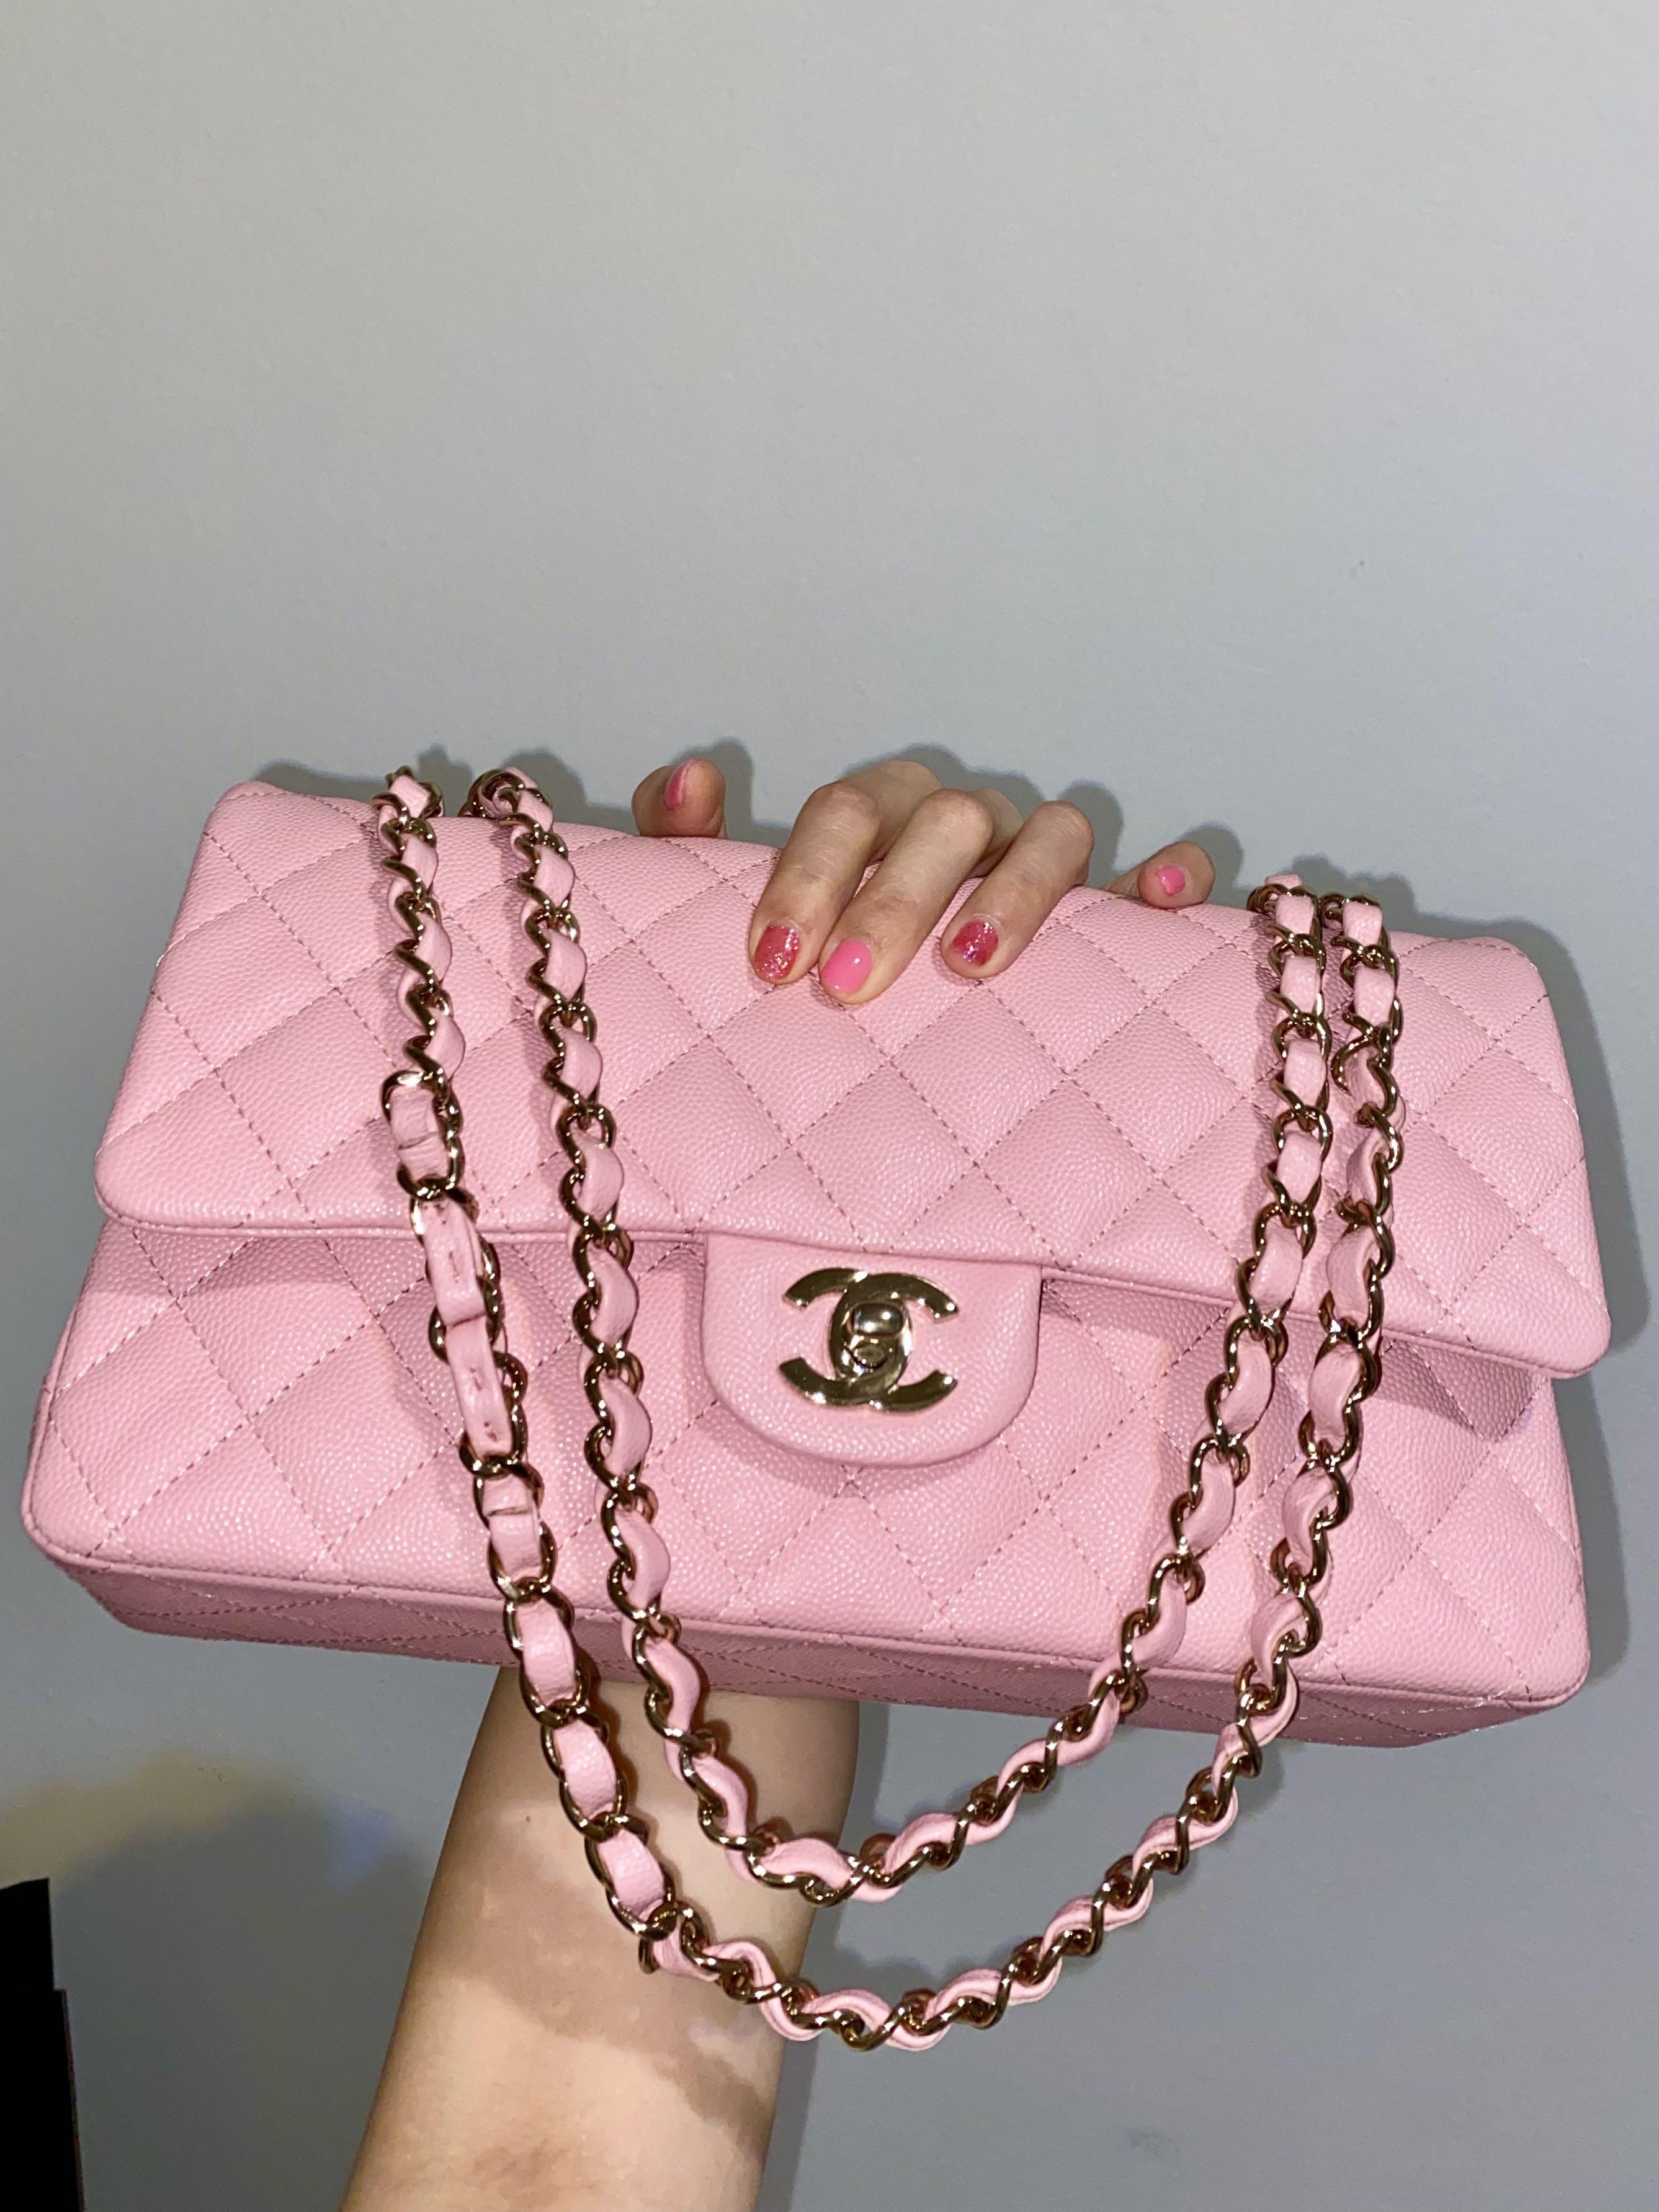 chanel 19 pink bag